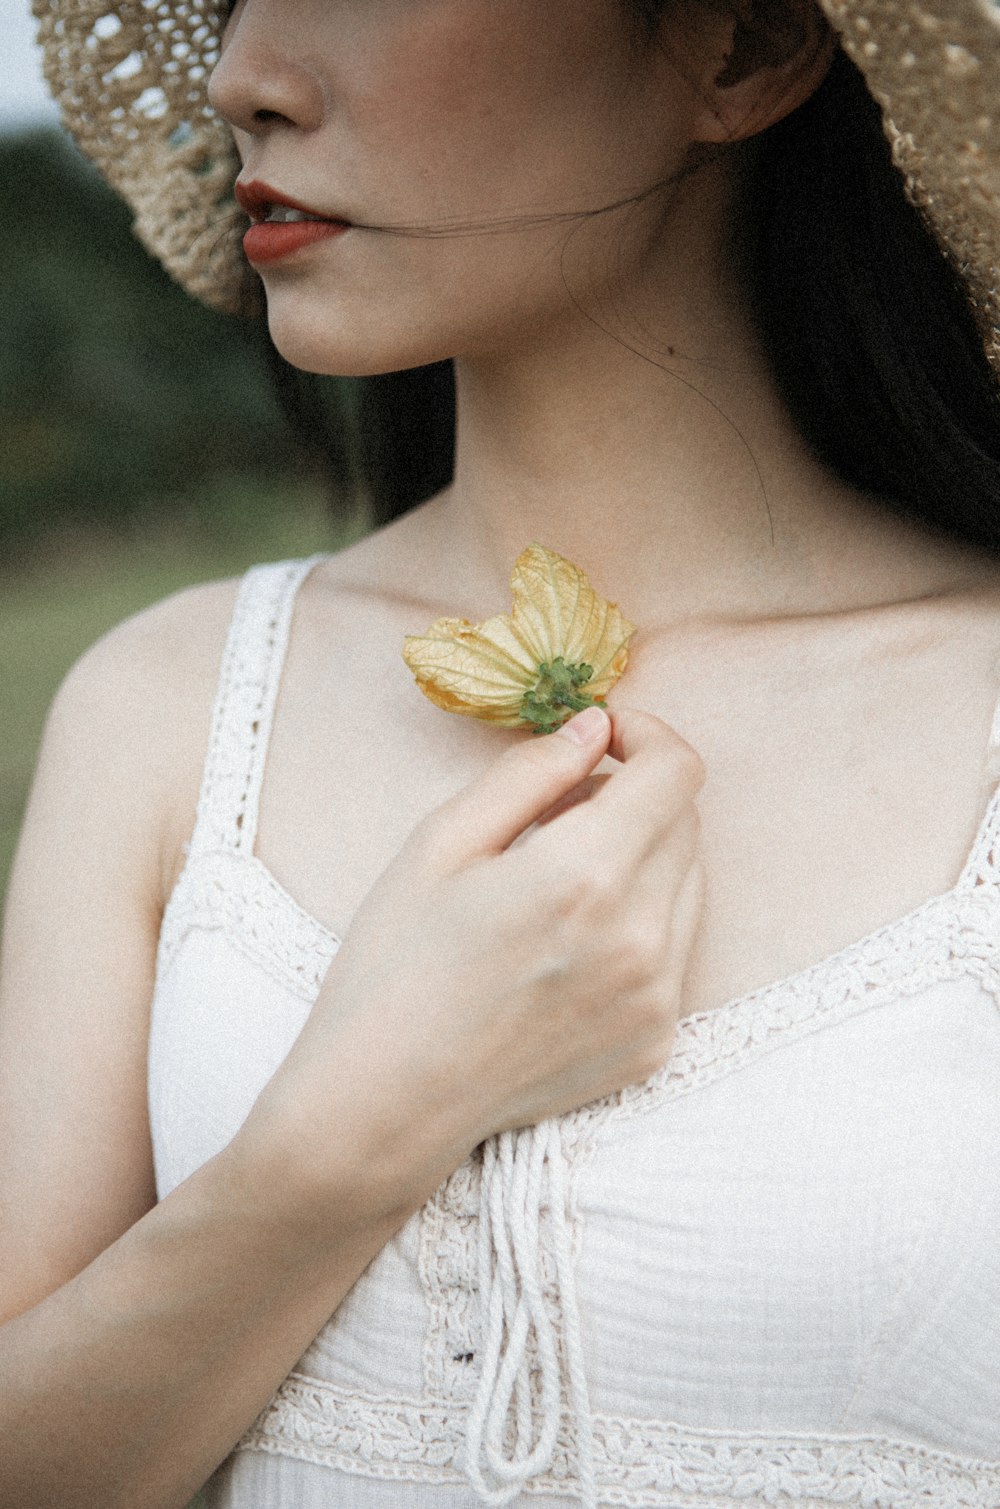 woman wearing white sleeveless top holding brown flower